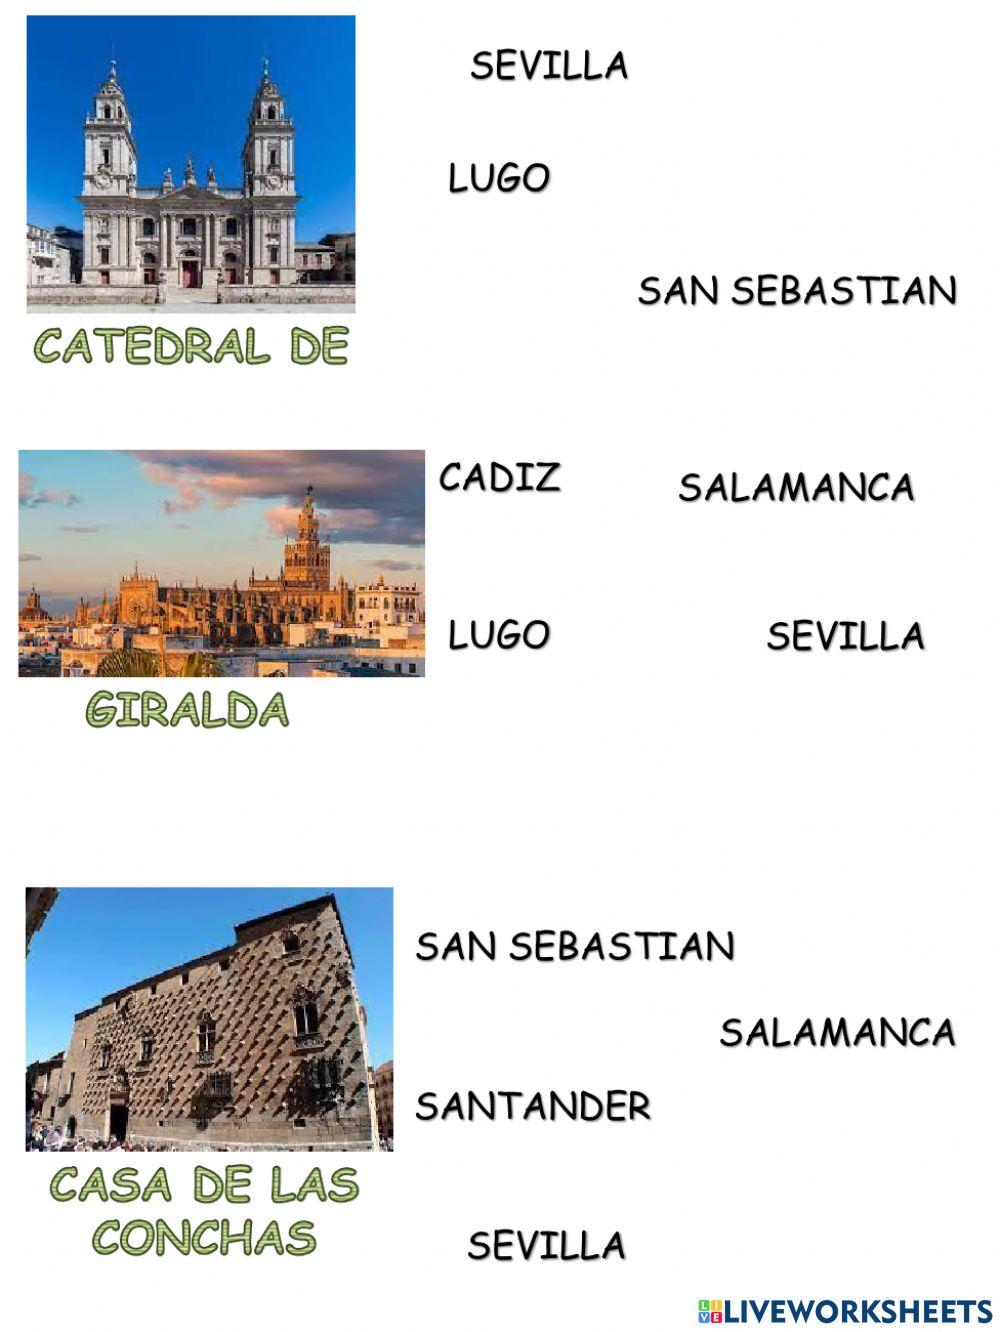 Sevilla, cadiz, lugo